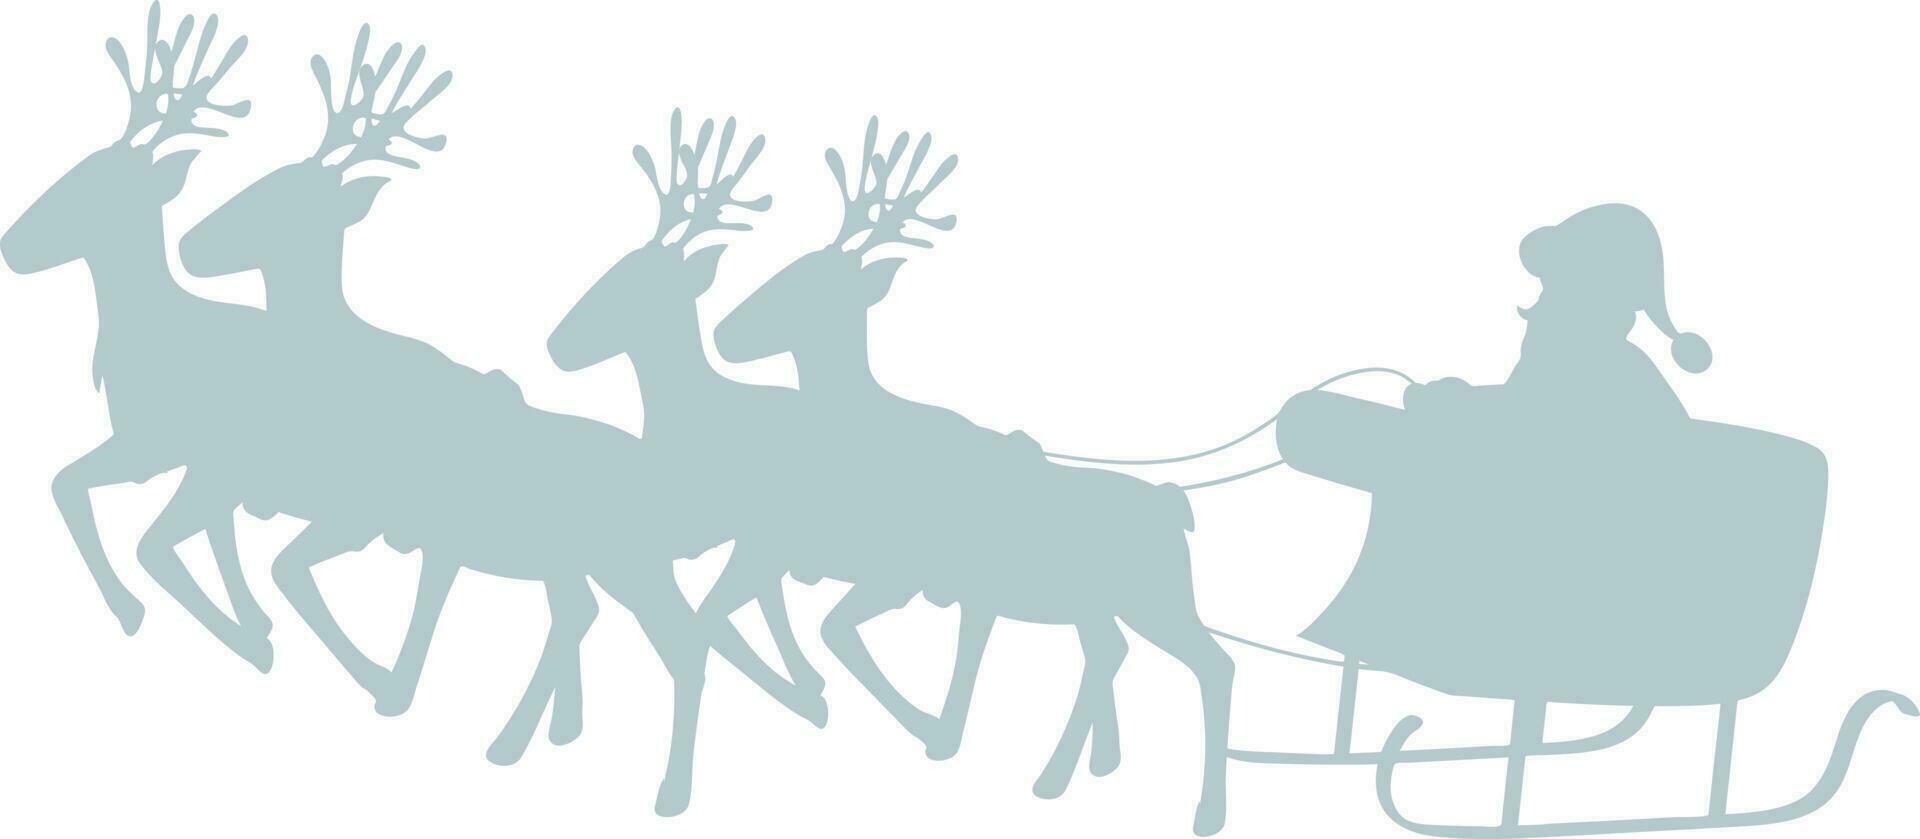 Gray santa Claus with reindeer sleigh. vector